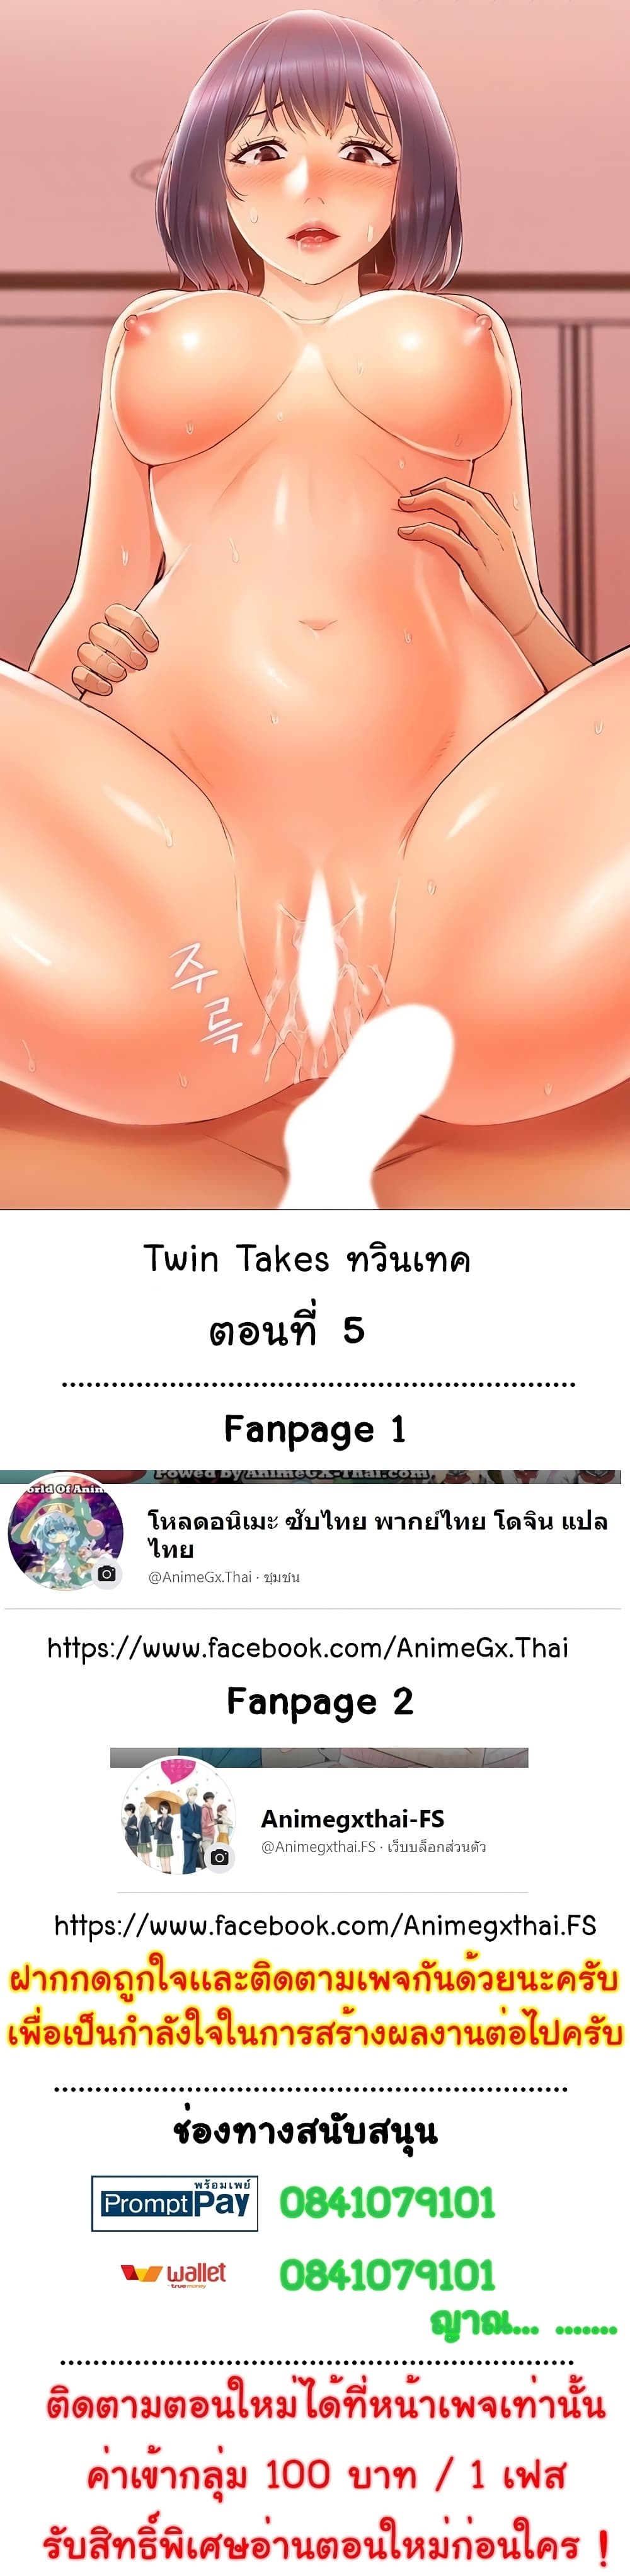 Twin Takes 5 01